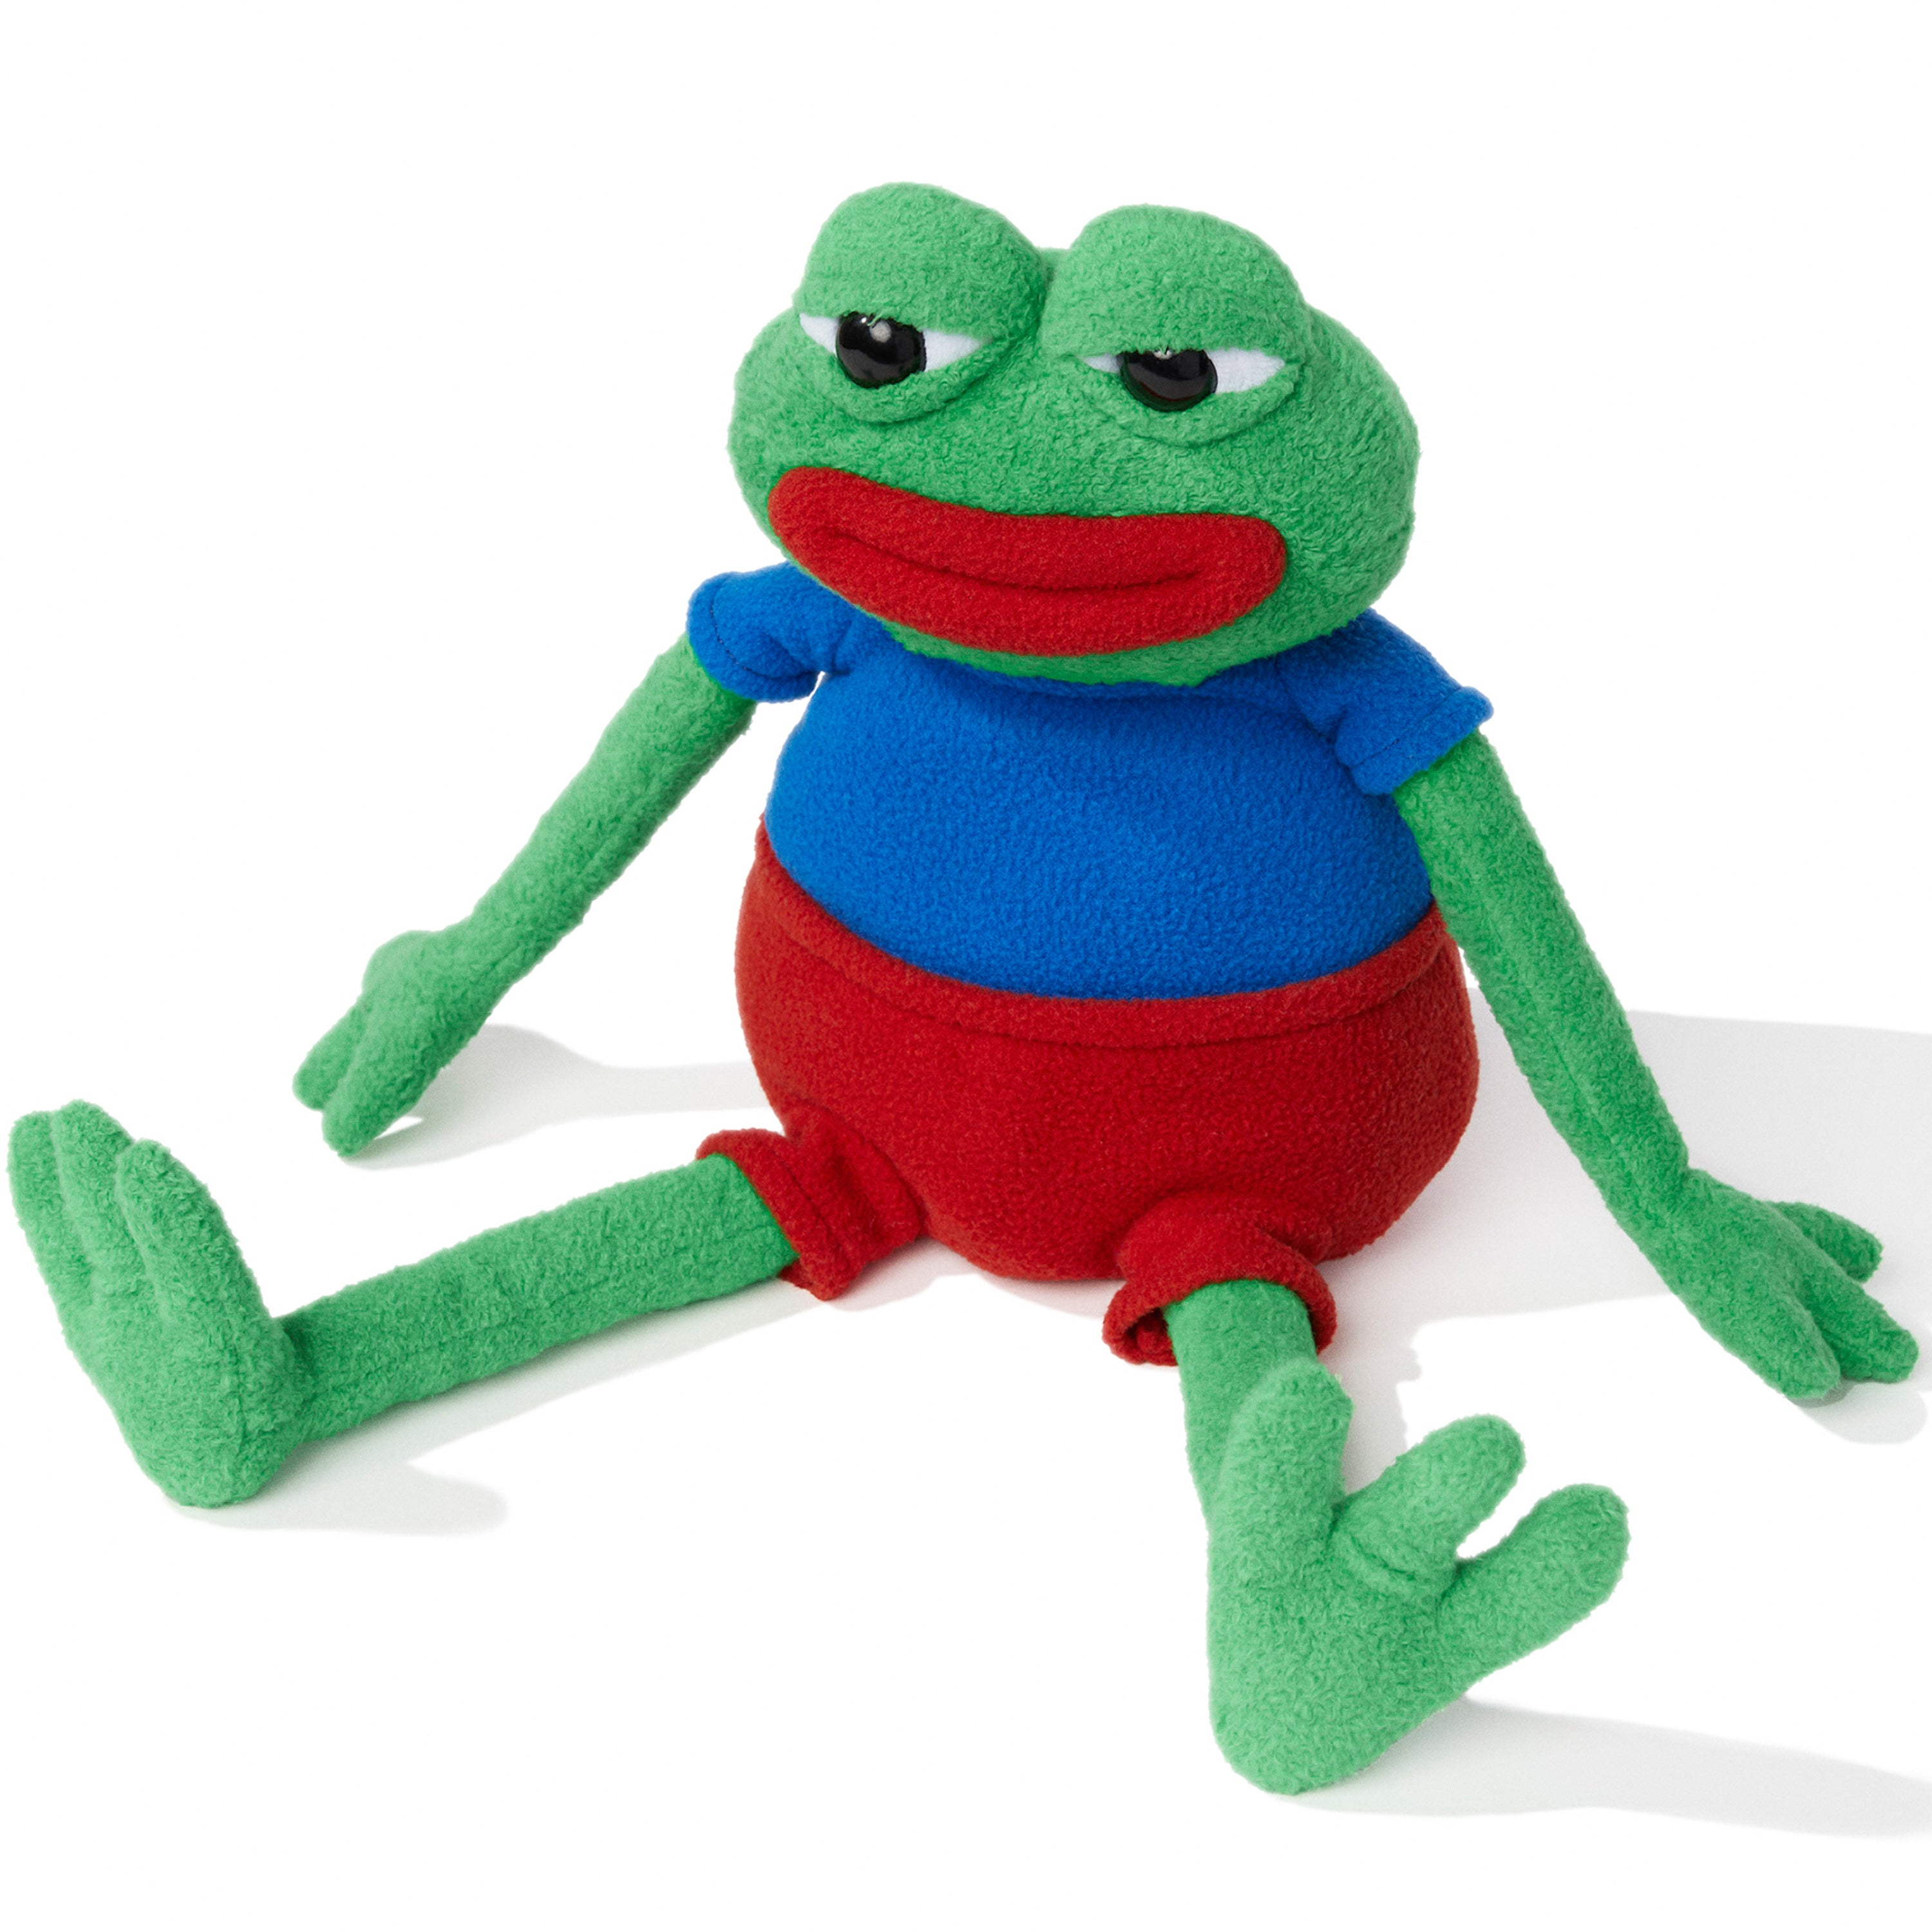 Pepe The Frog – Uncute